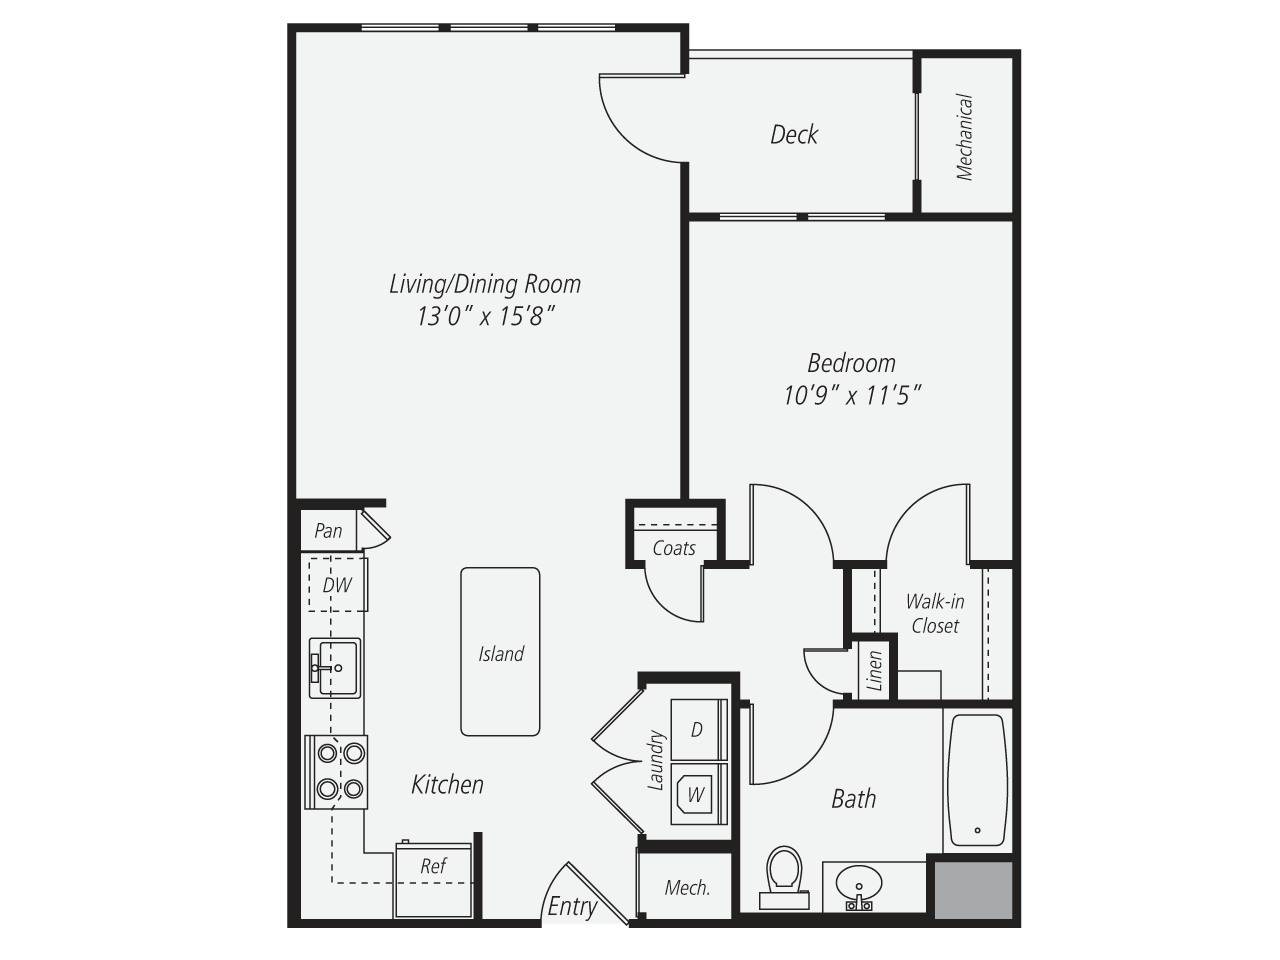 Floorplan for Apartment #119, 1 bedroom unit at Halstead Norwalk